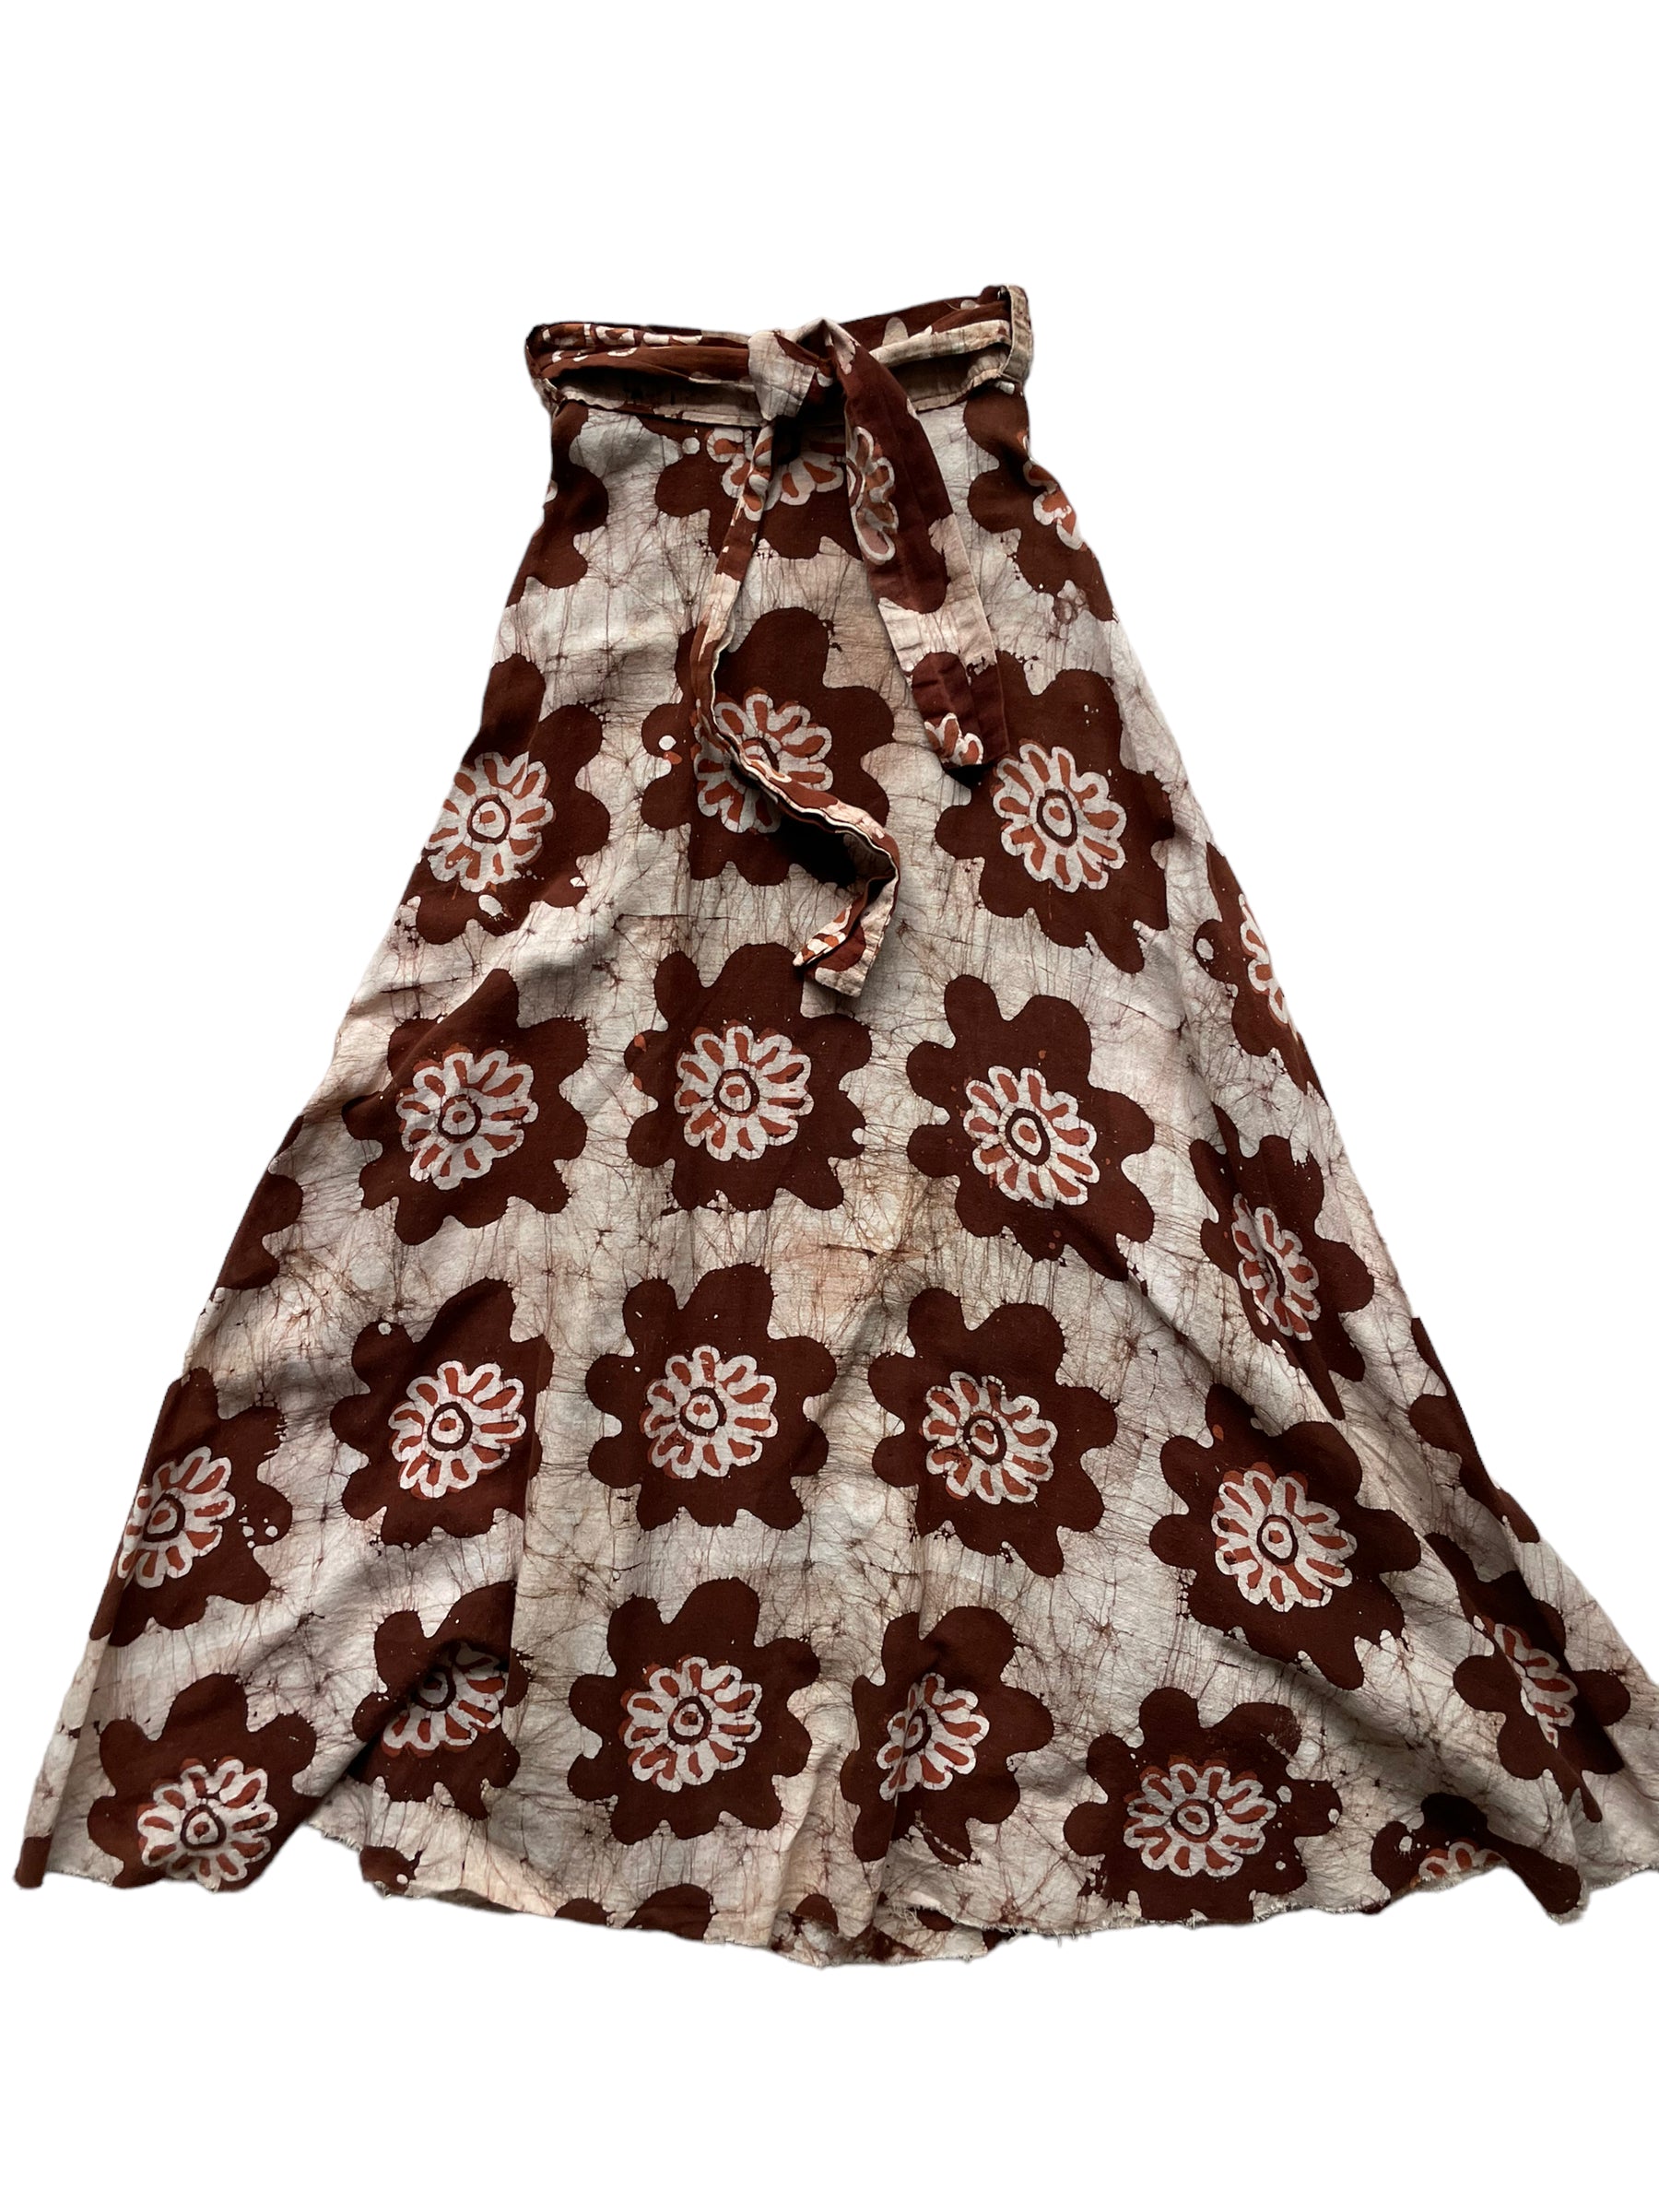 Full front view of Vintage 1970s Indian Cotton Batik Wrap Skirt